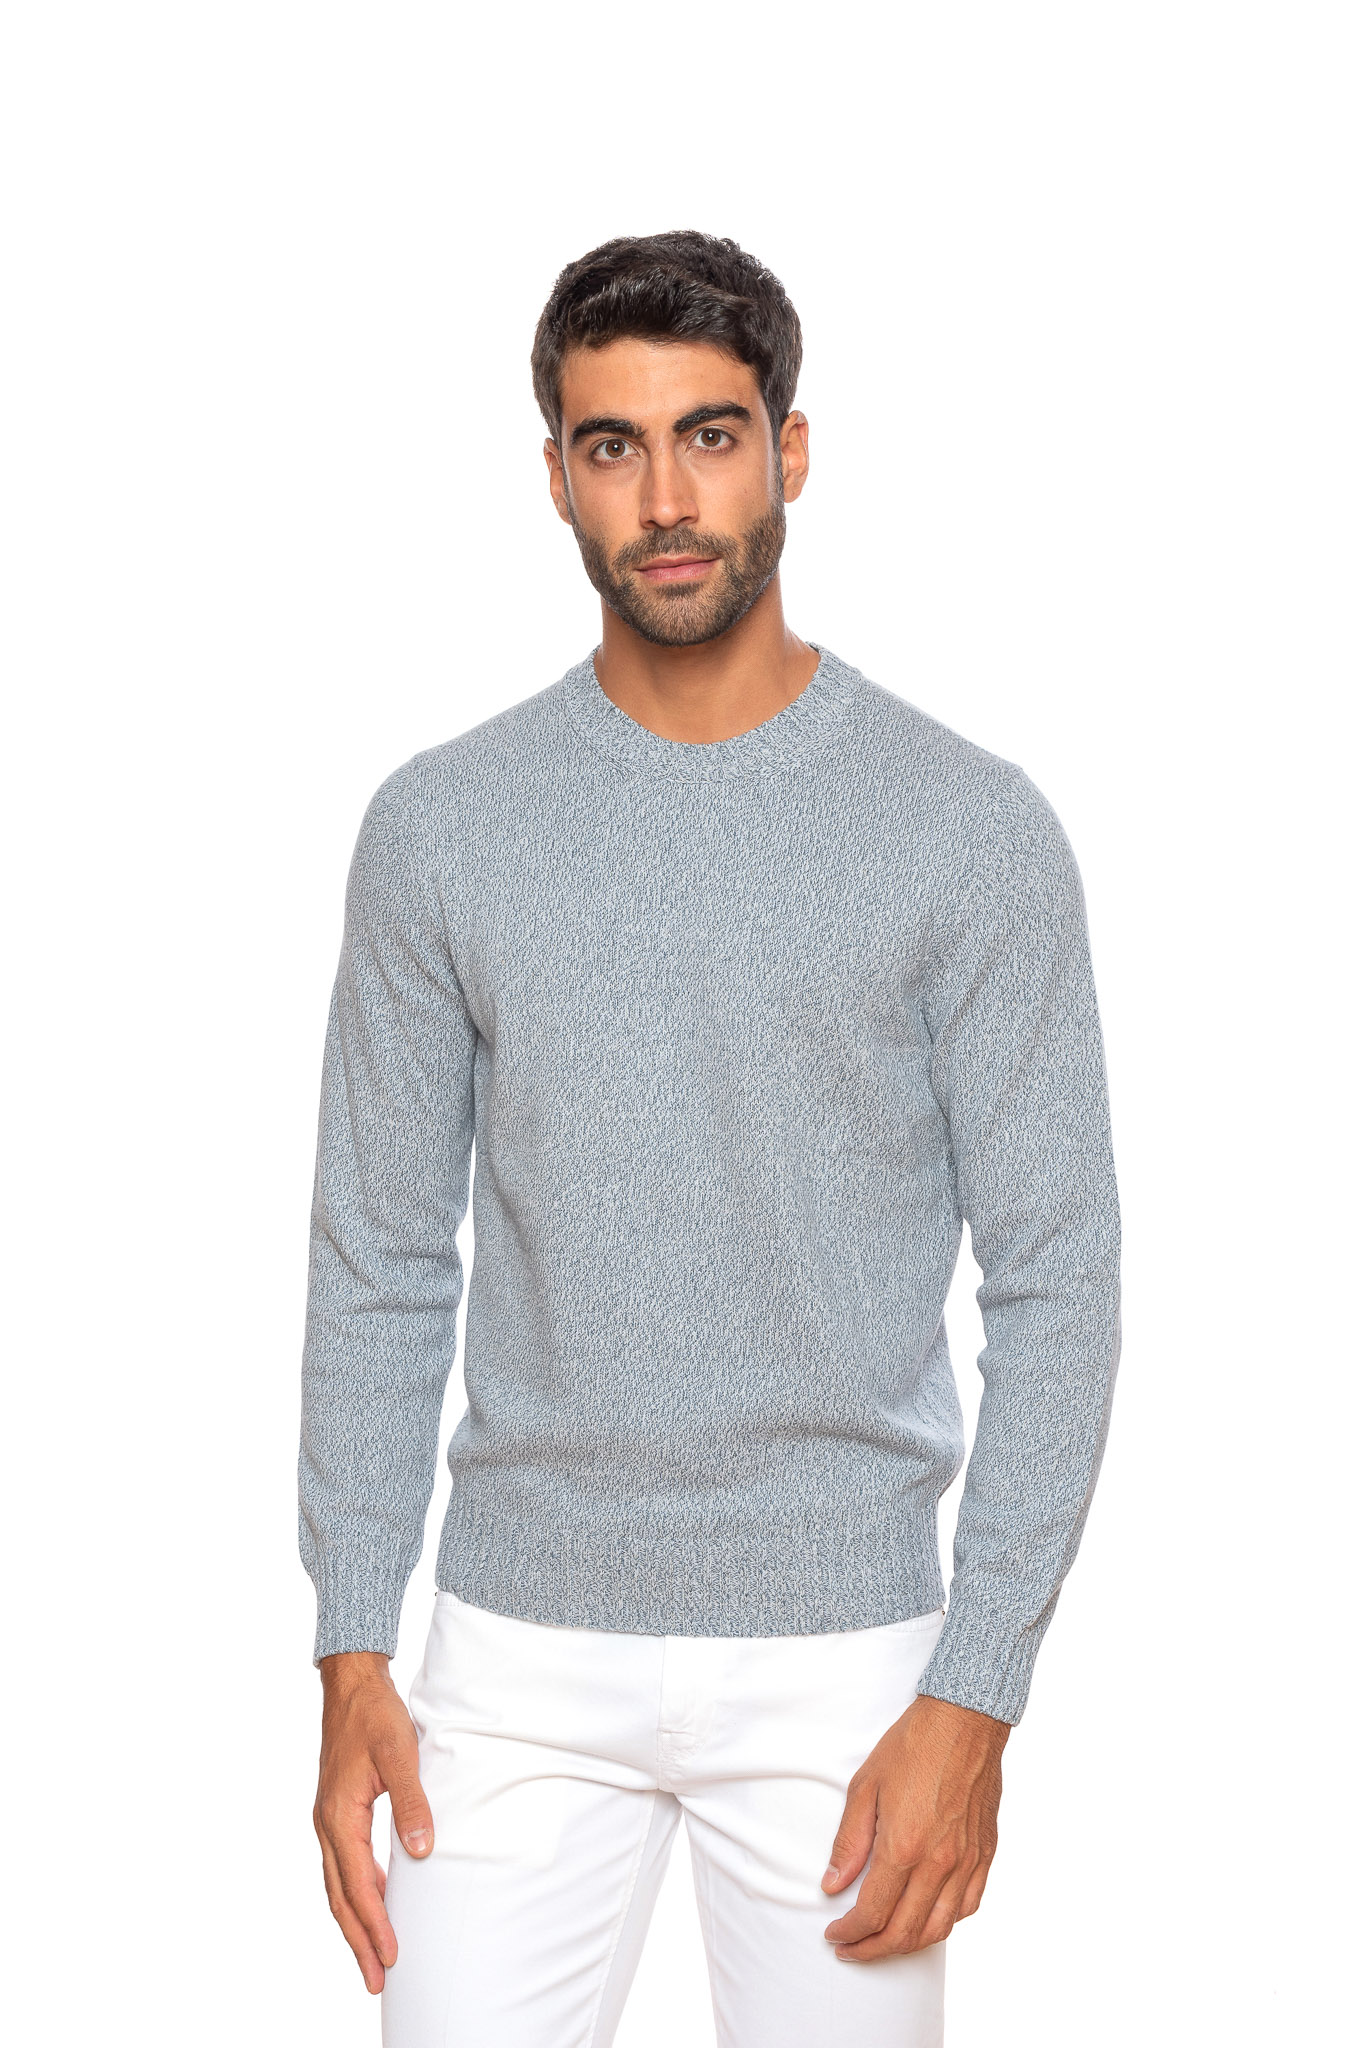 Luxury Knitwear FIORONI CASHMERE by Attolini Sweater Thick Cotton Grey ...